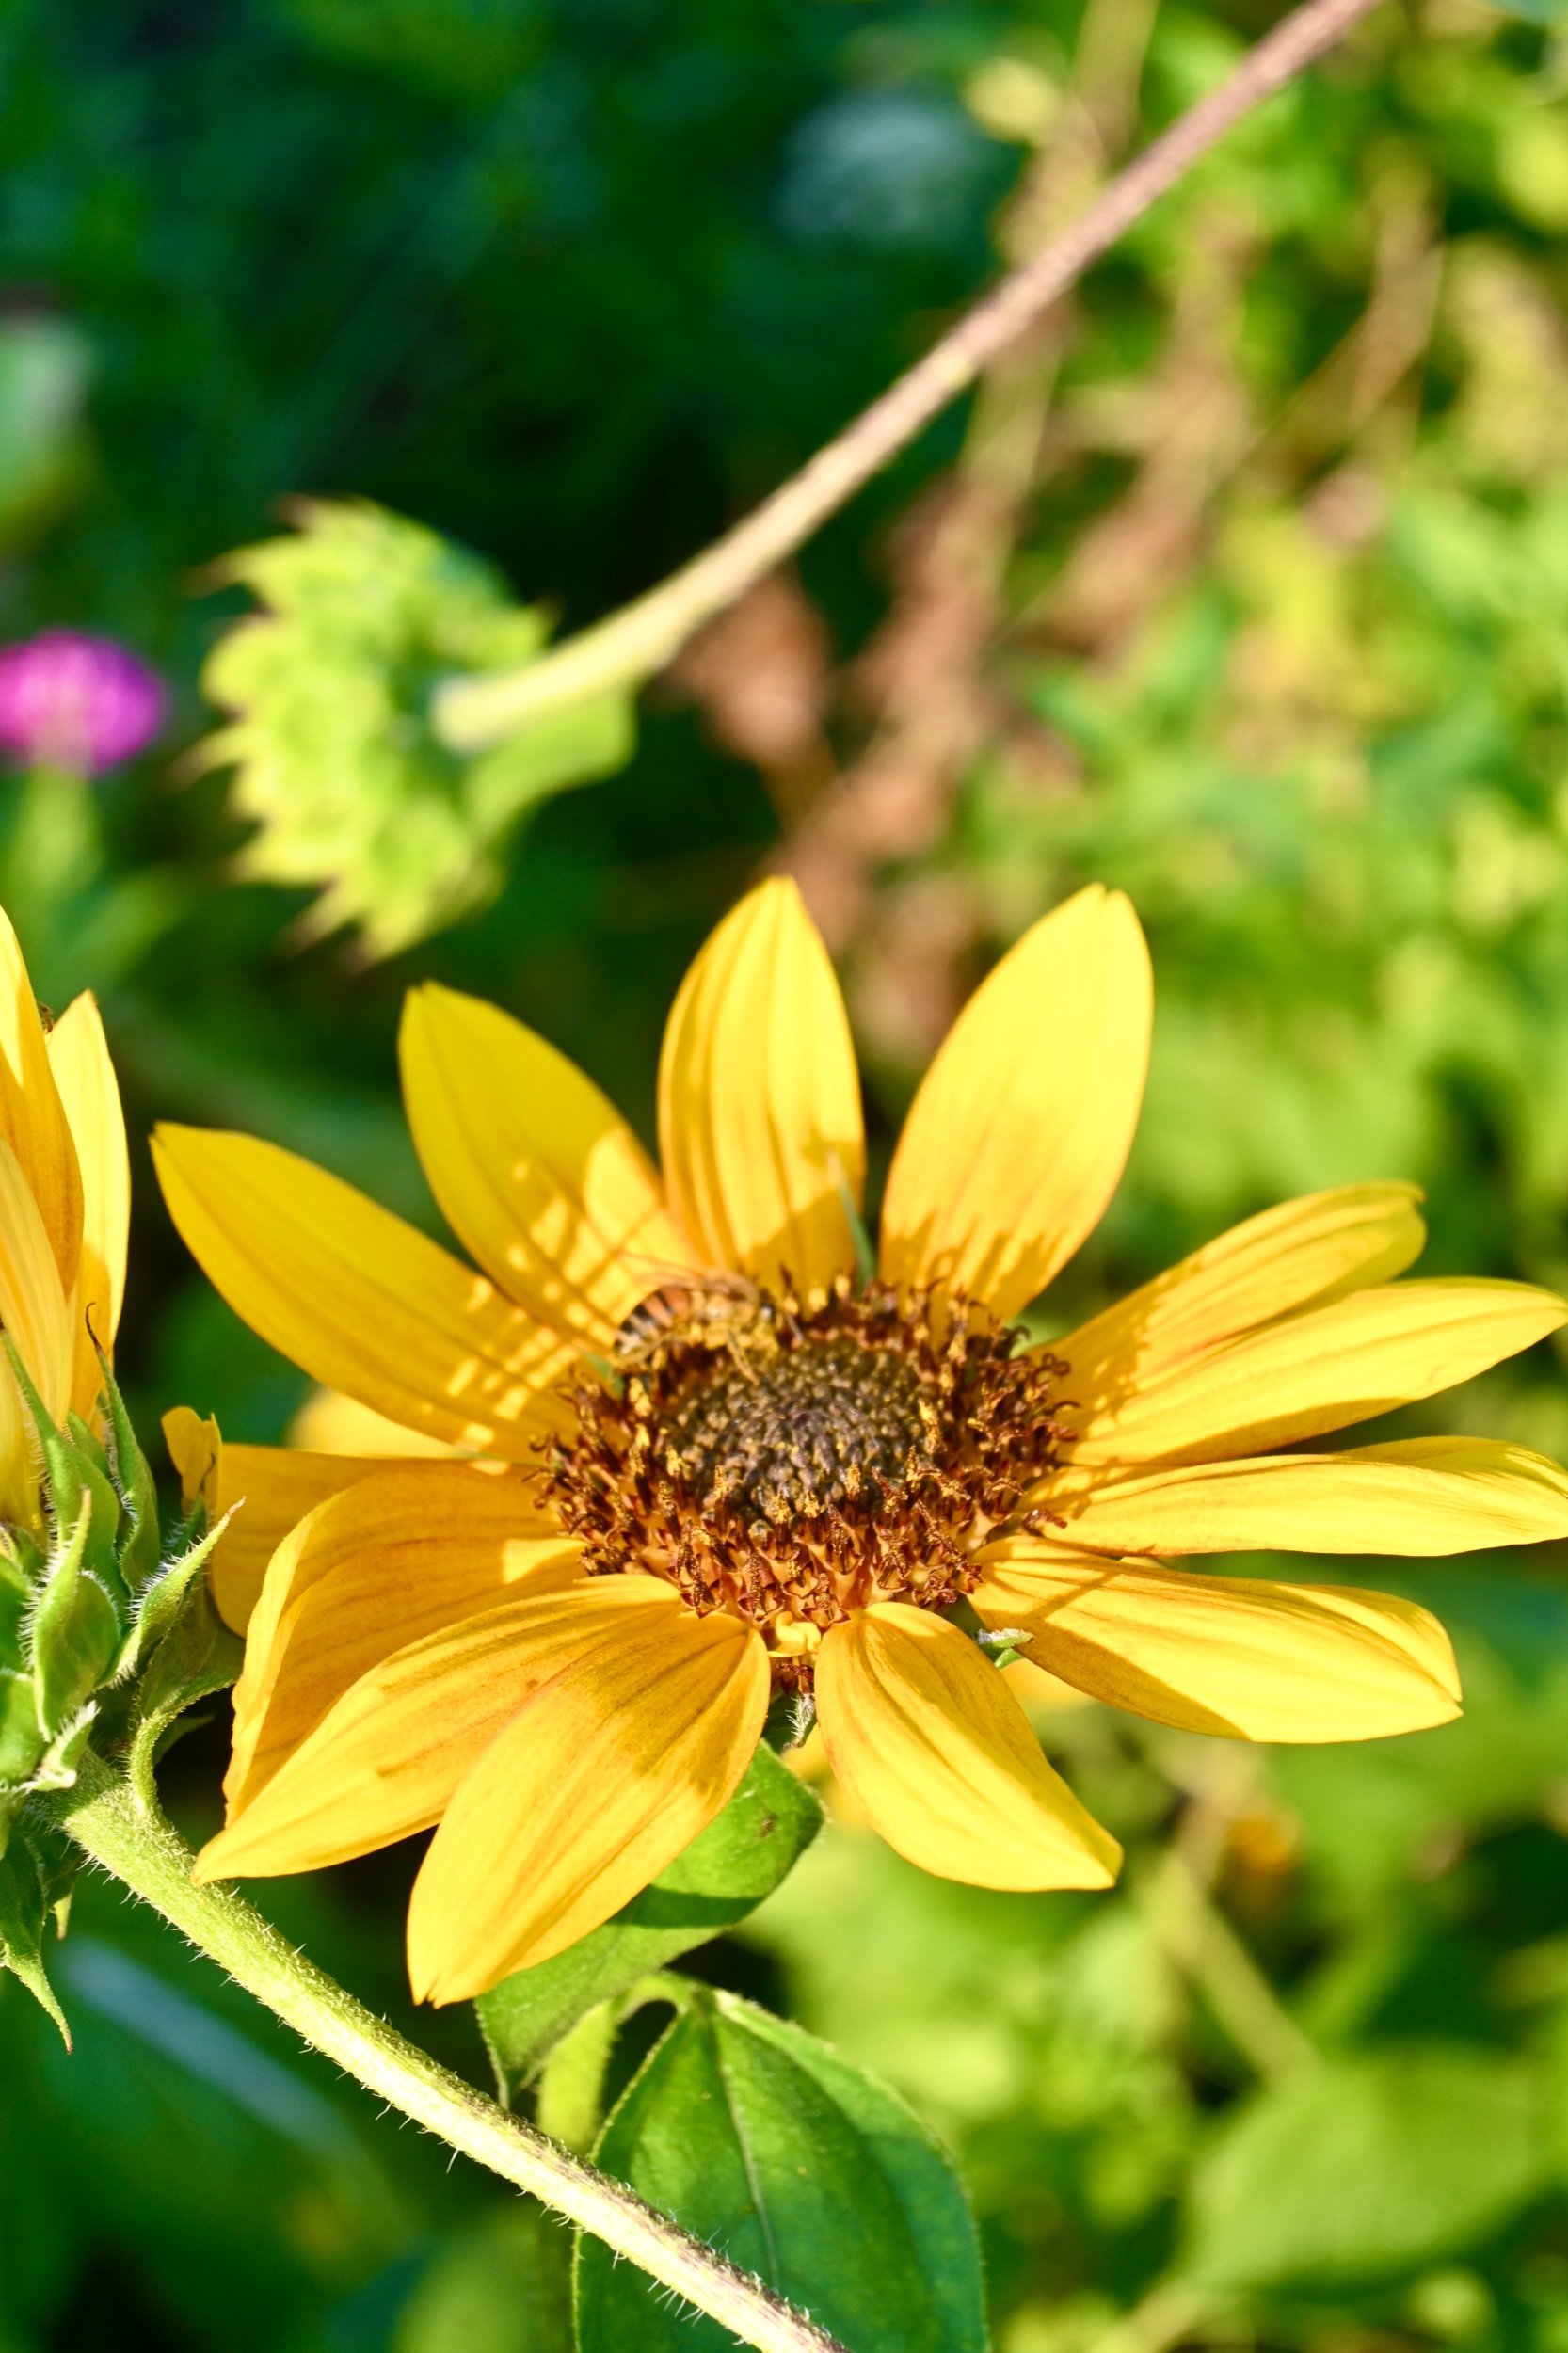 Helianthus annuus / Common sunflower